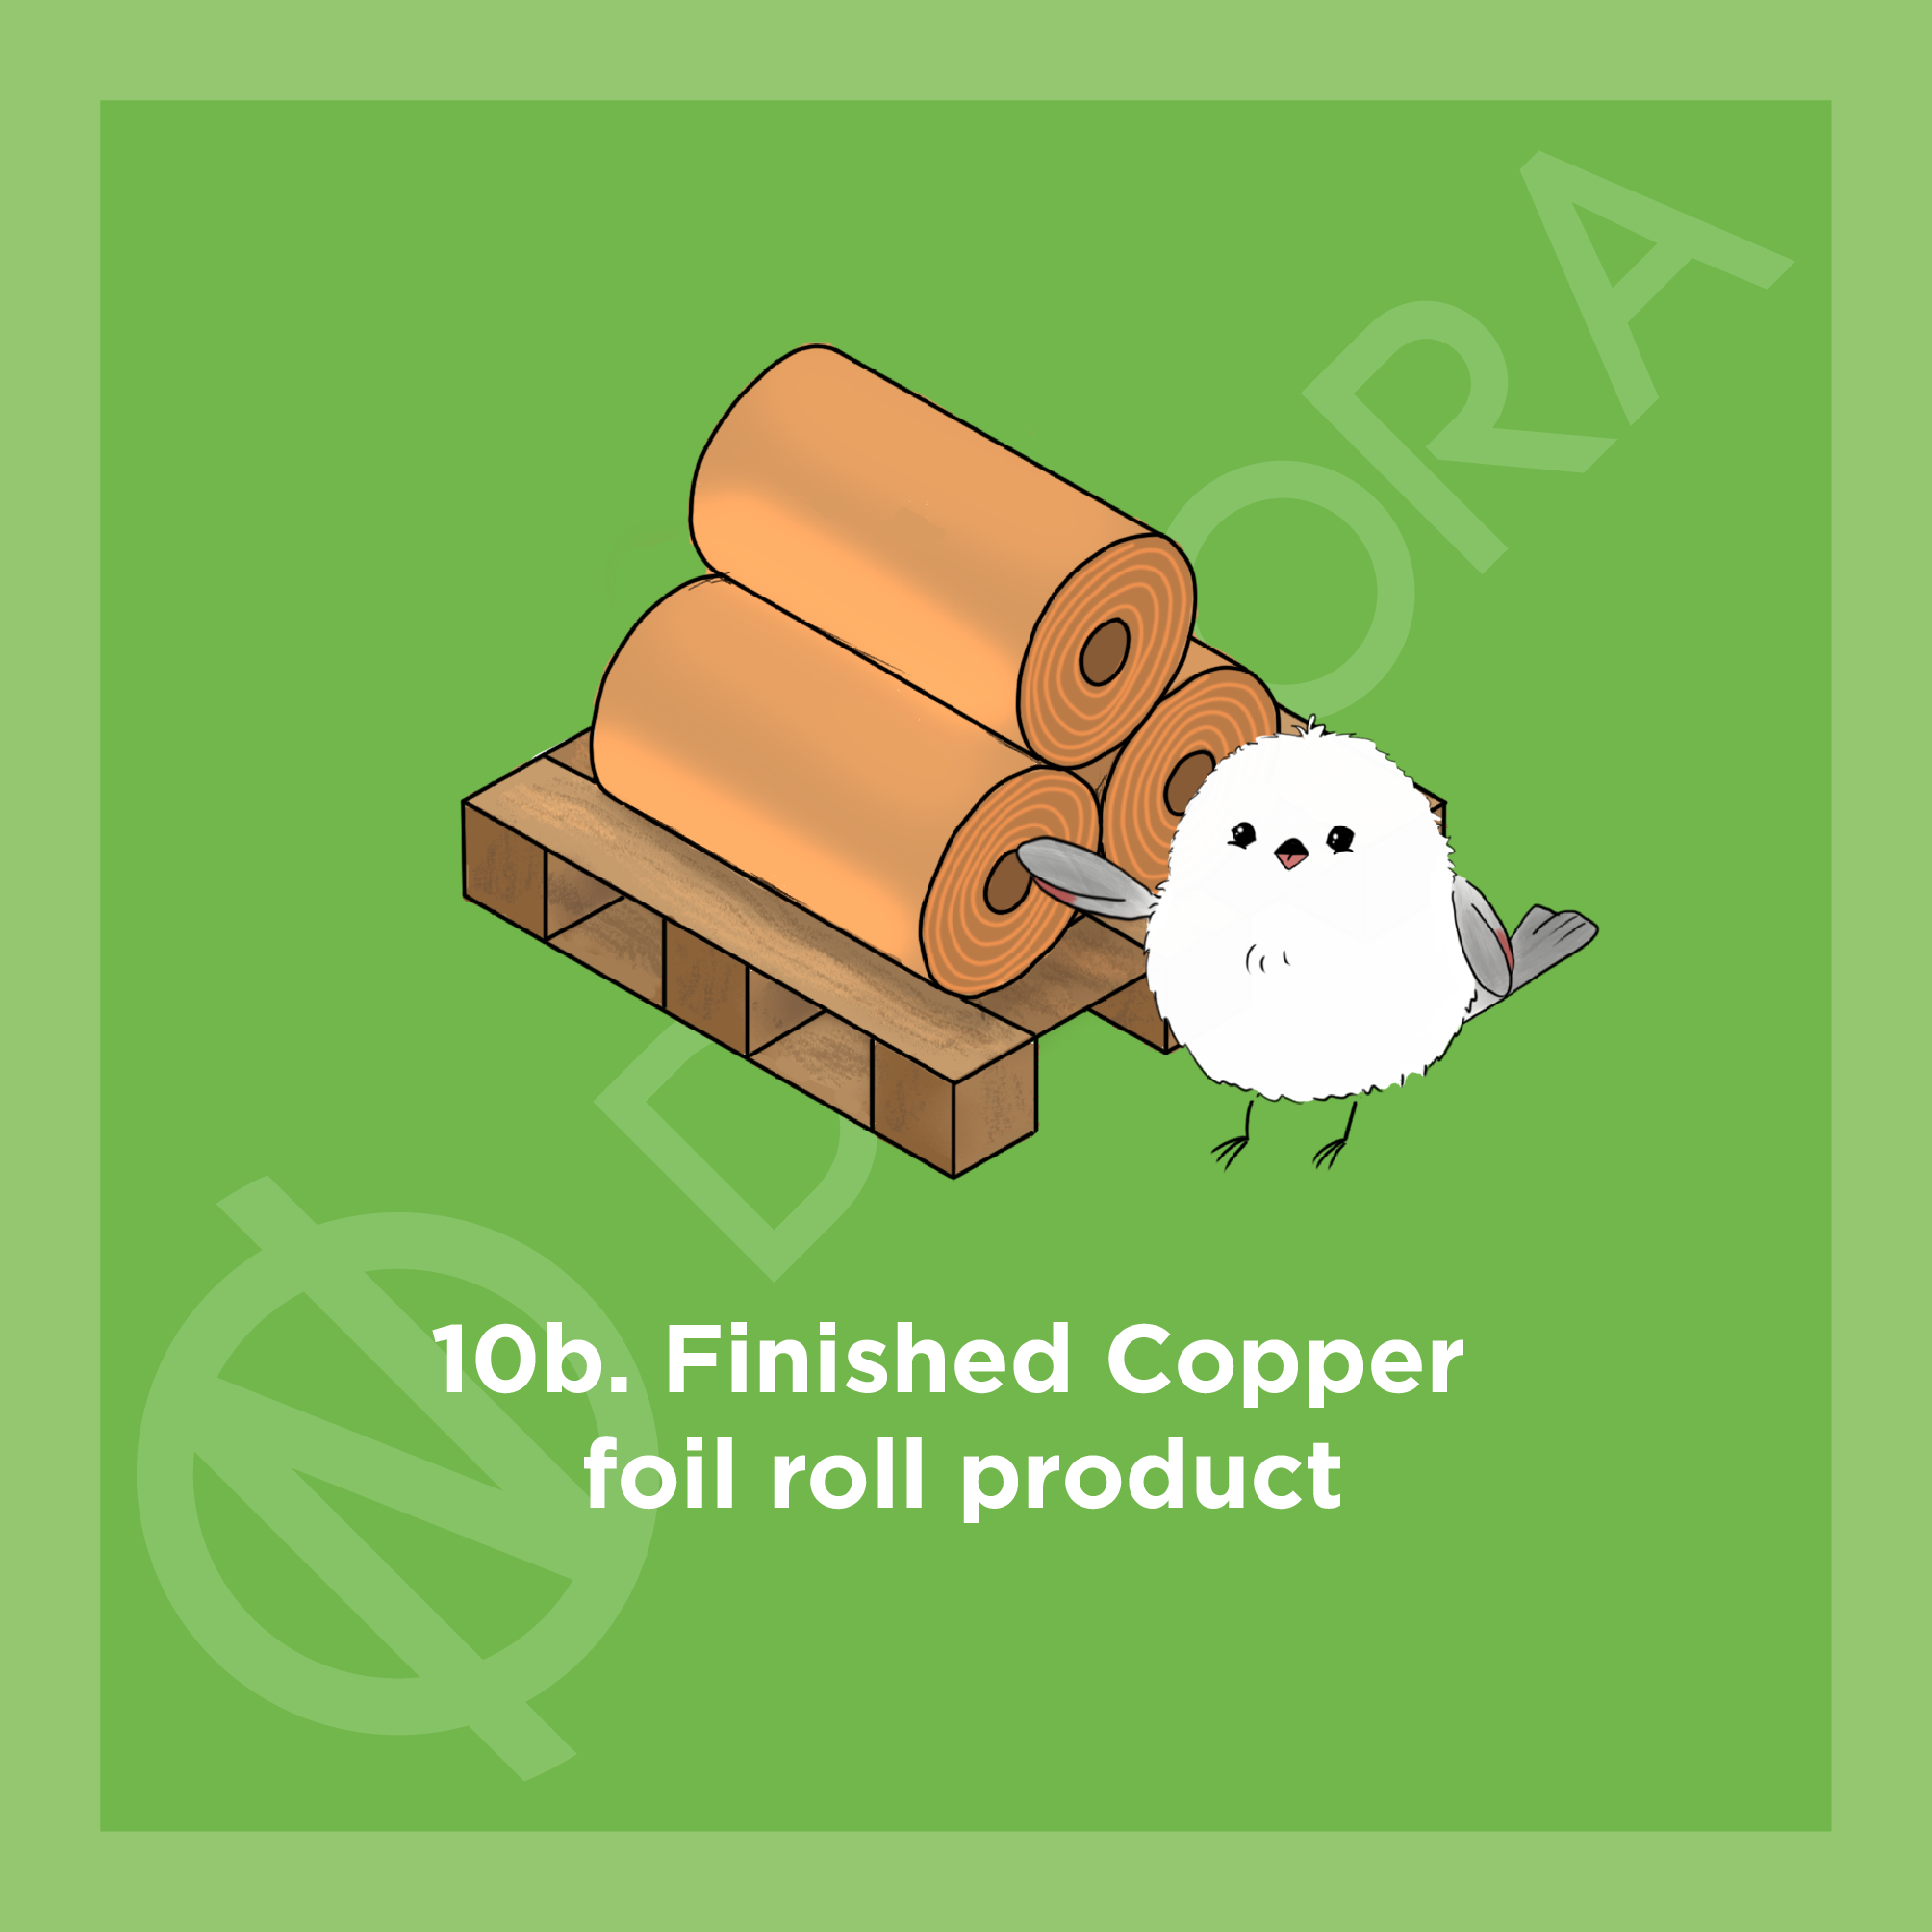 DeNora Copper foil manufacturing Step10b - Finished Copper foil roll product